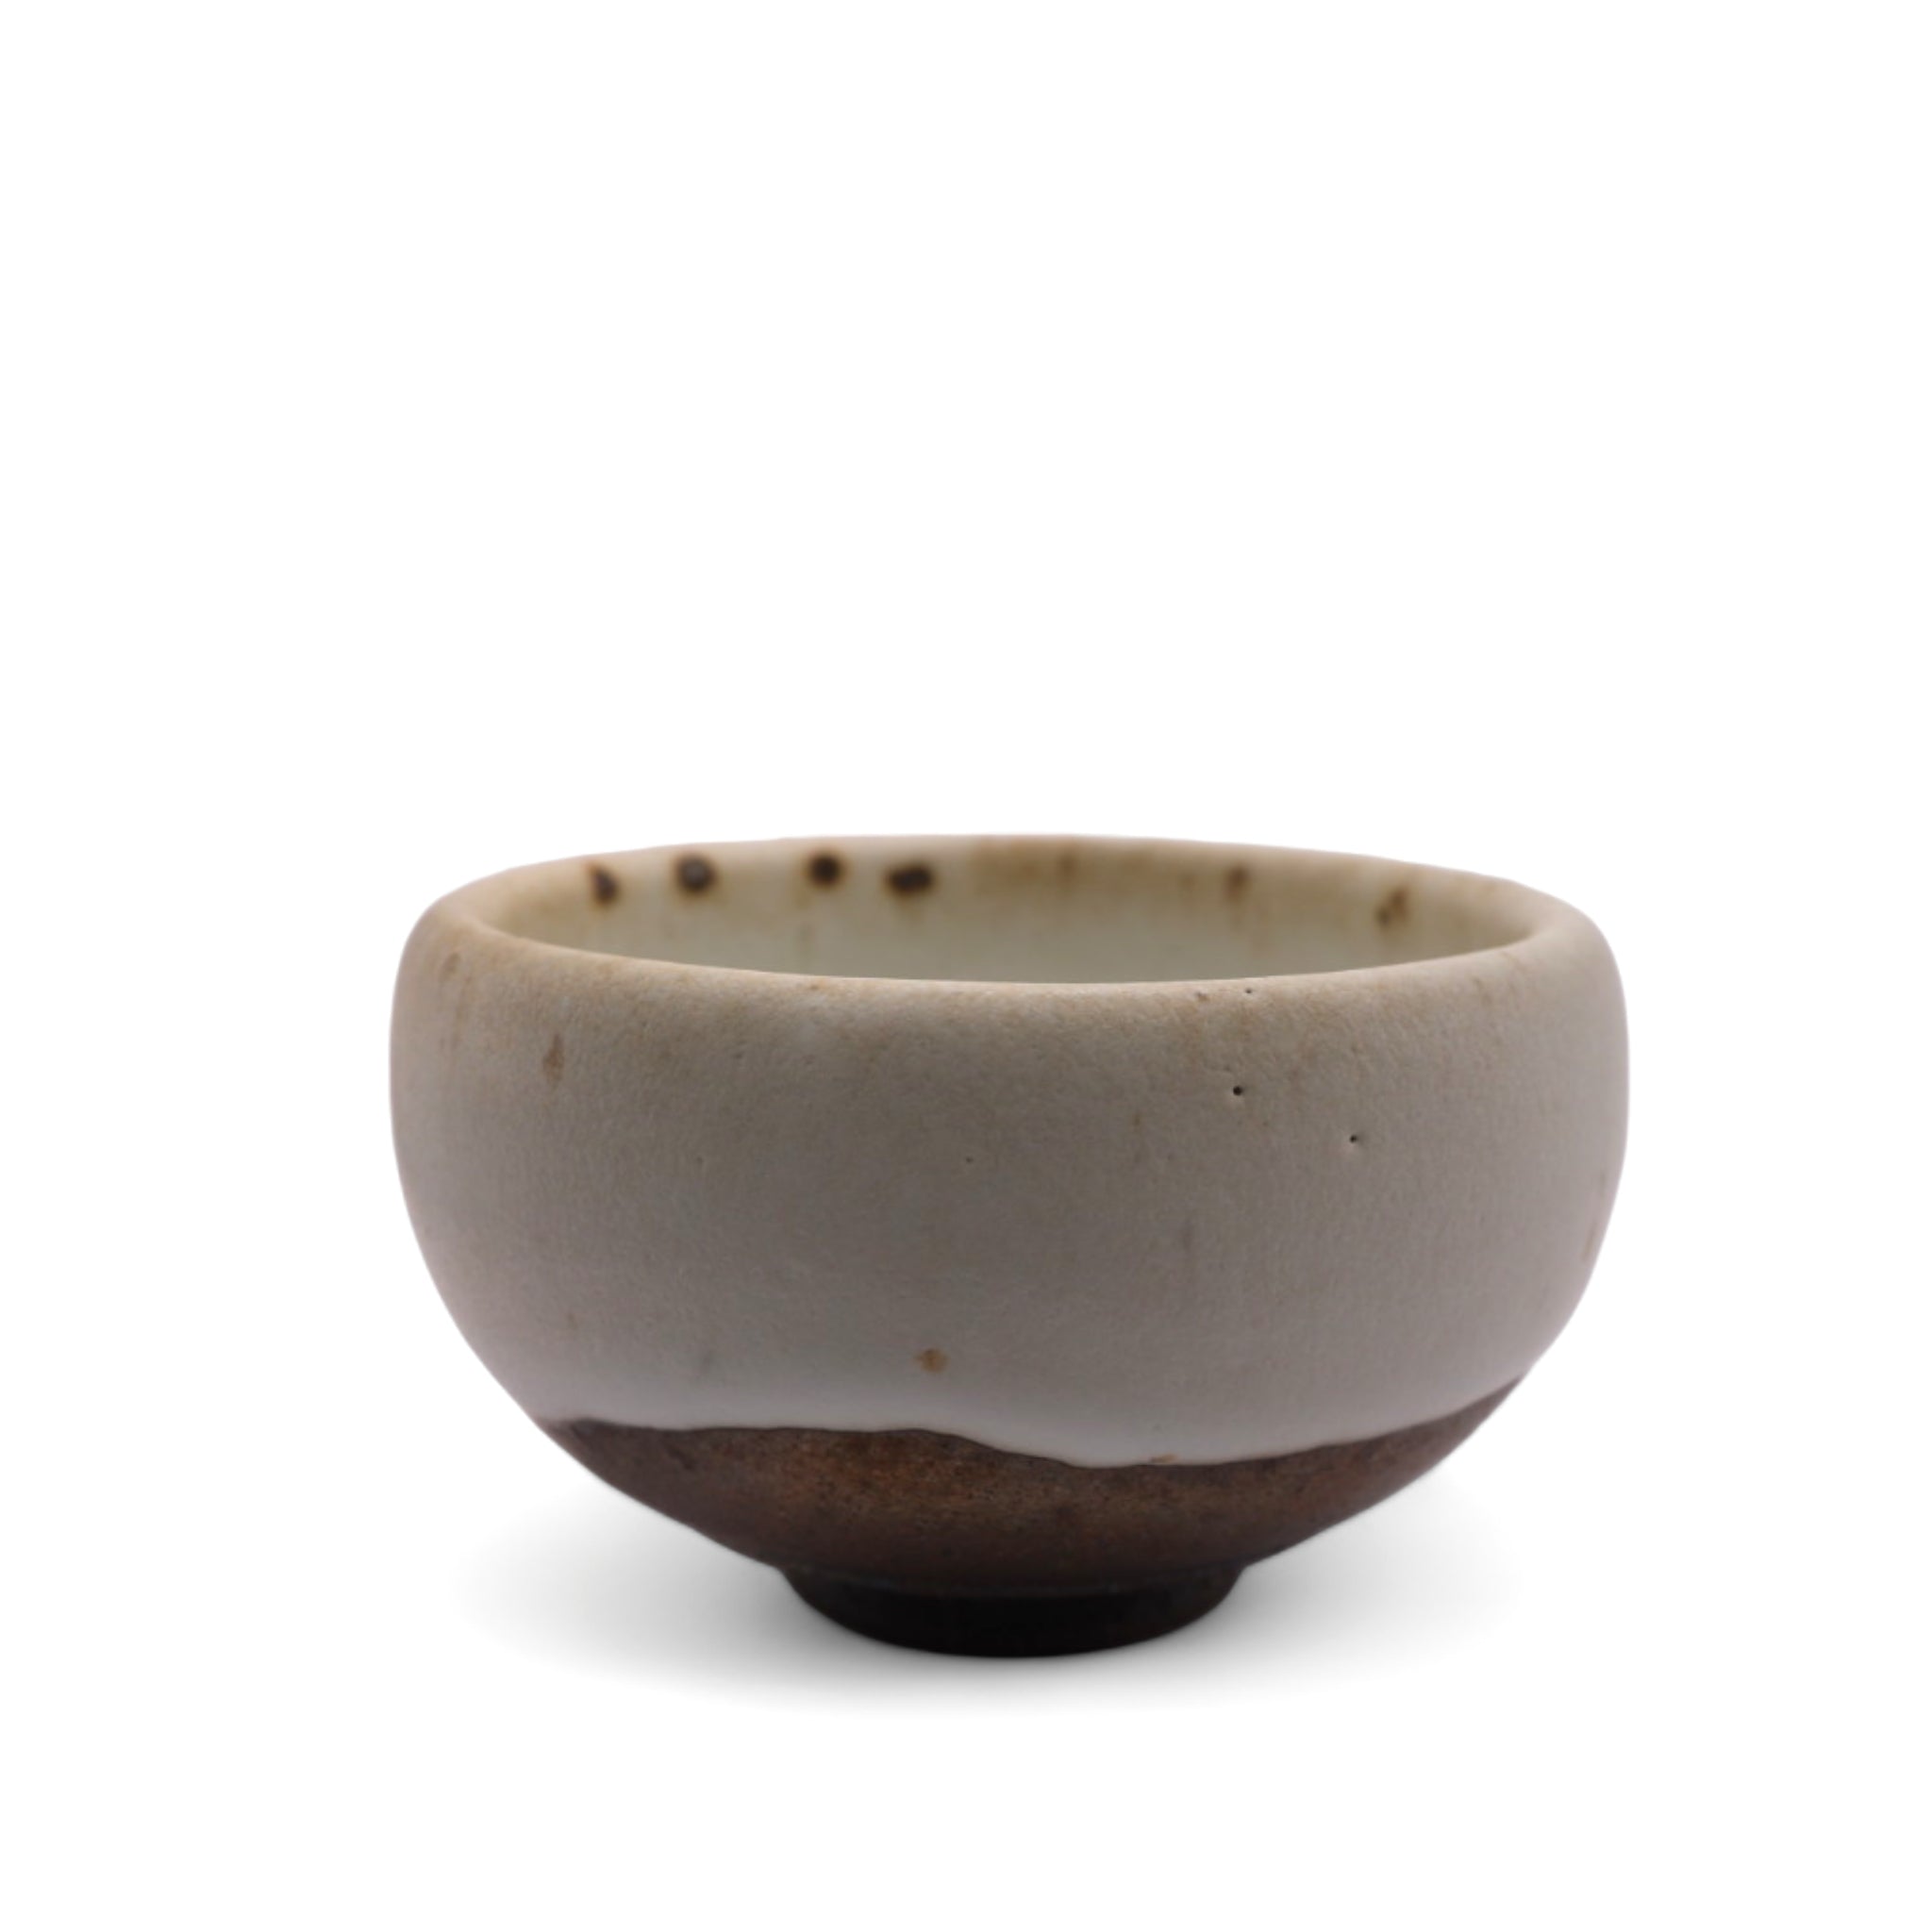 Taiwanese Handmade Wood-Fired Ceramic Teacup - Creamy Horizon